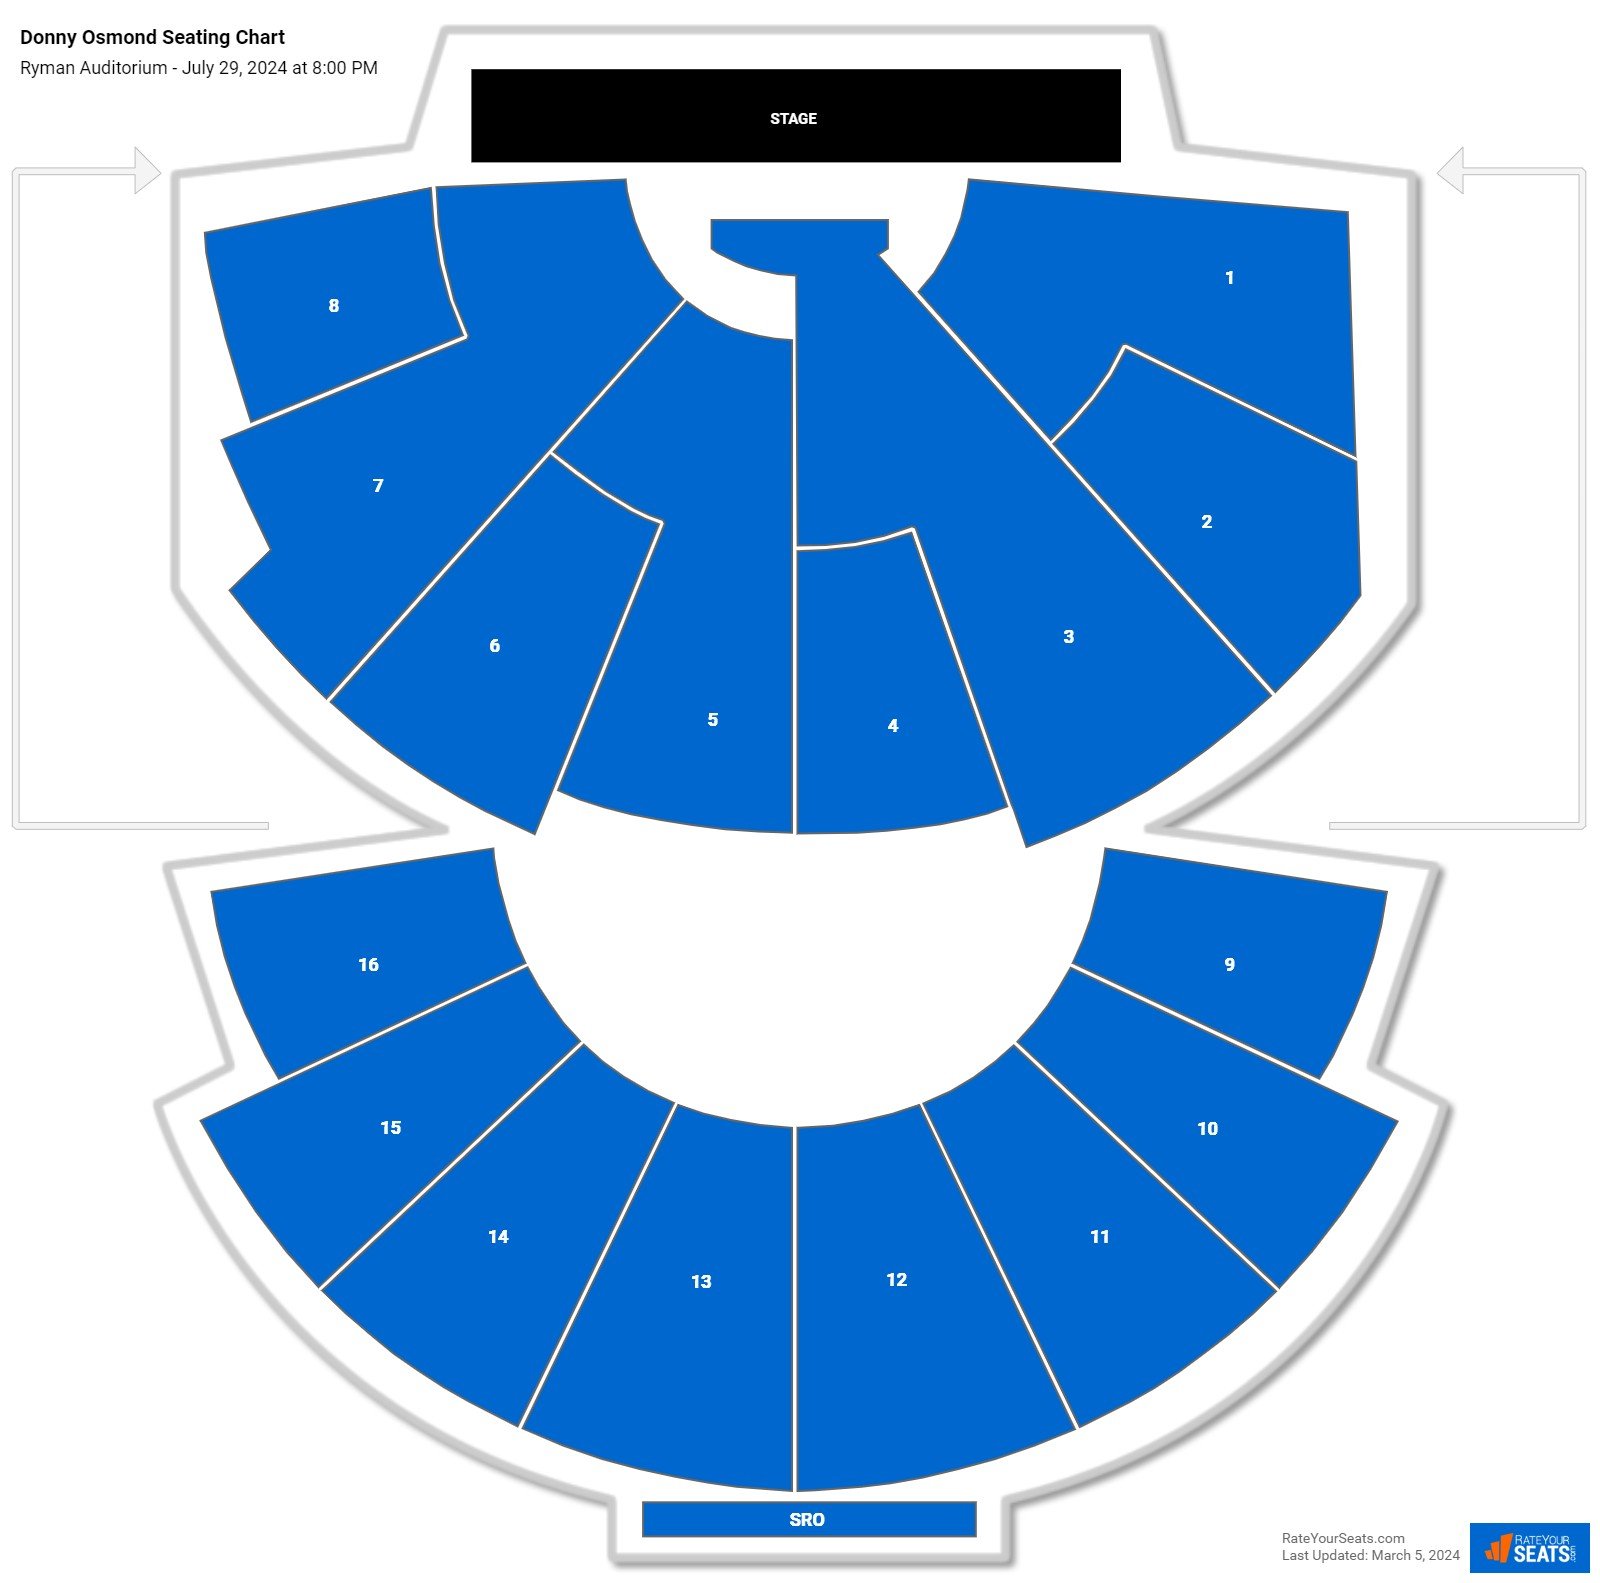 Donny Osmond seating chart Ryman Auditorium